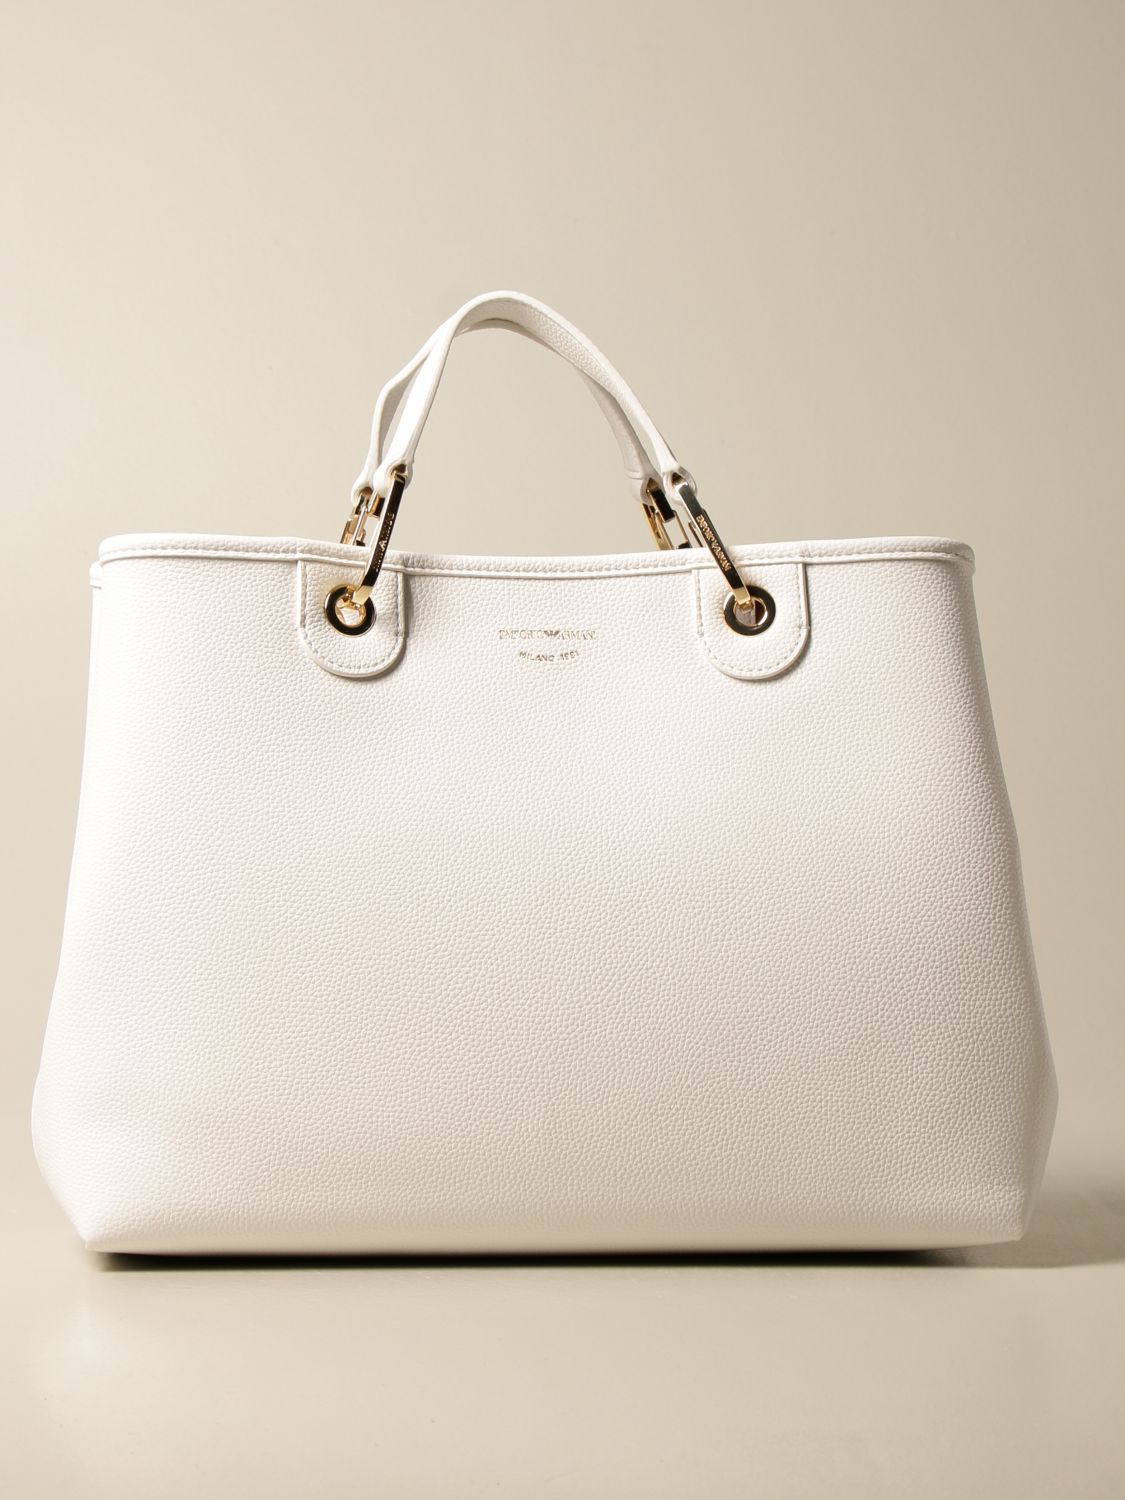 EMPORIO ARMANI: handbag in textured synthetic leather - White | Emporio ...